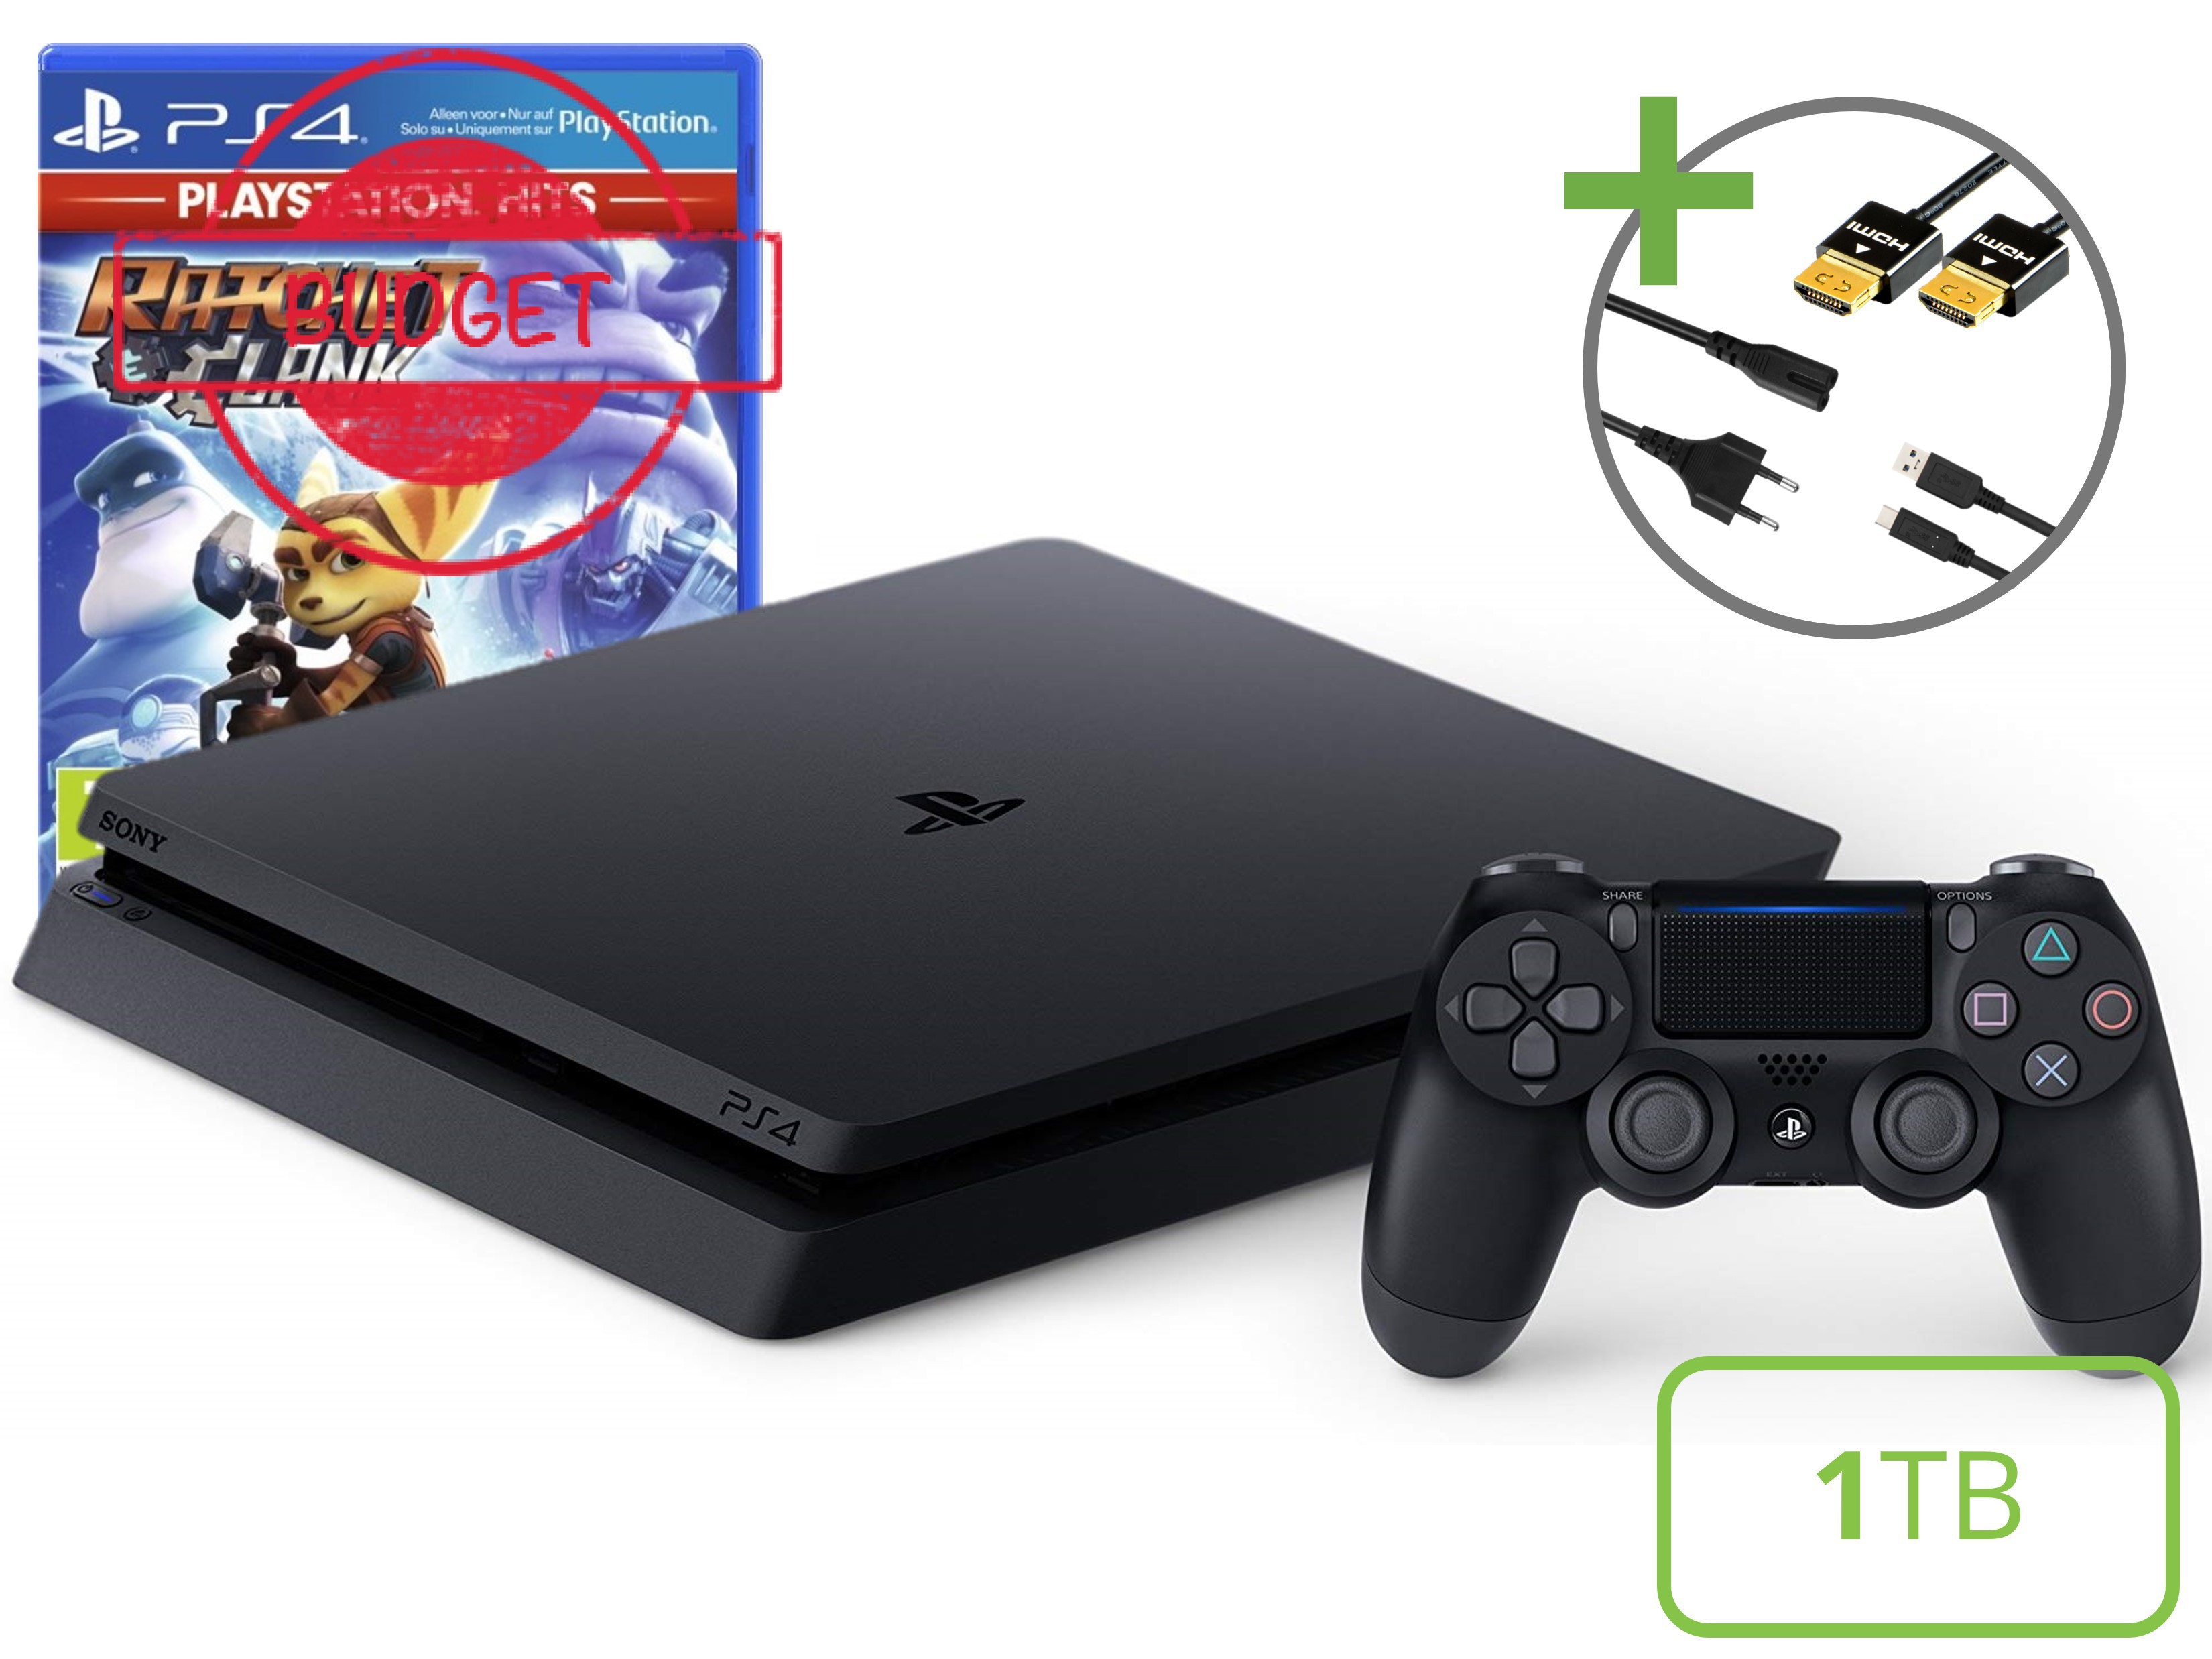 Sony PlayStation 4 Slim Starter Pack - 1TB Ratchet & Clank Edition - Budget Kopen | Playstation 4 Hardware